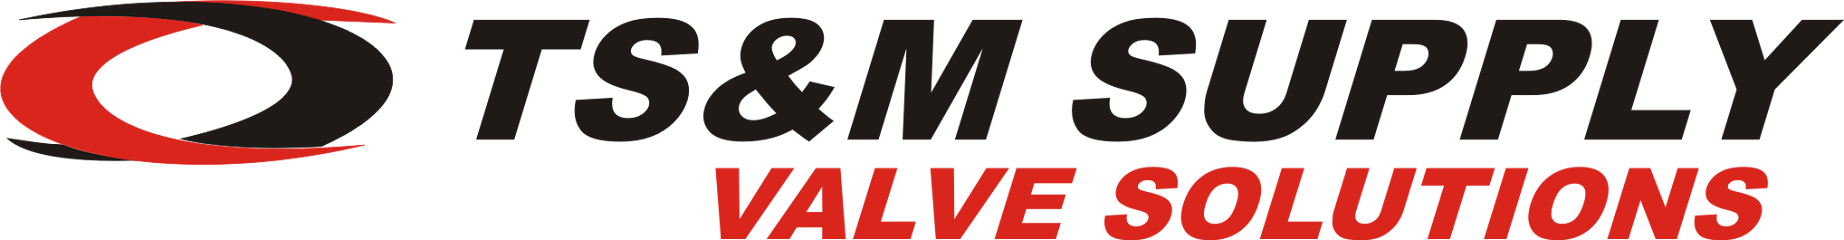 TS&M Valve Solutions